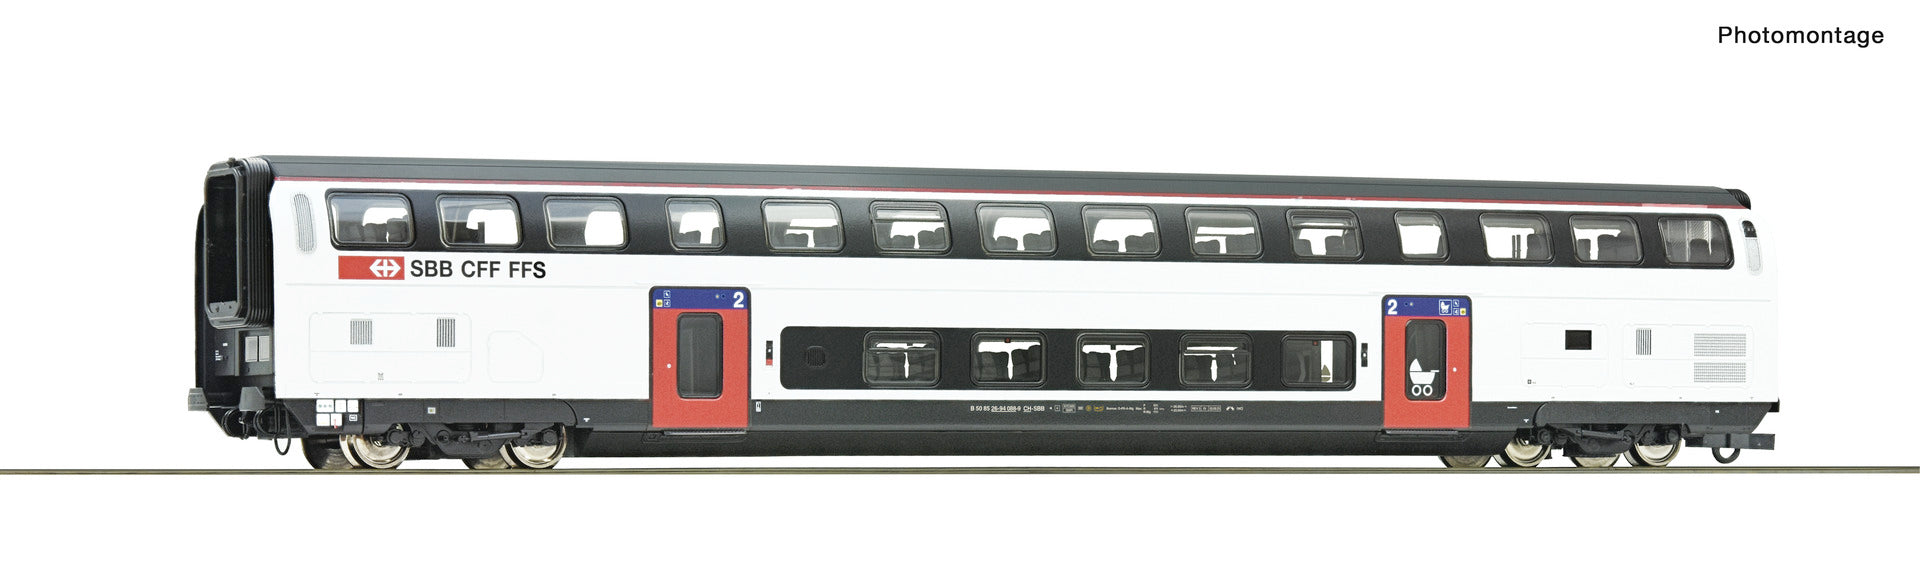 Roco page – Euro Model Trains